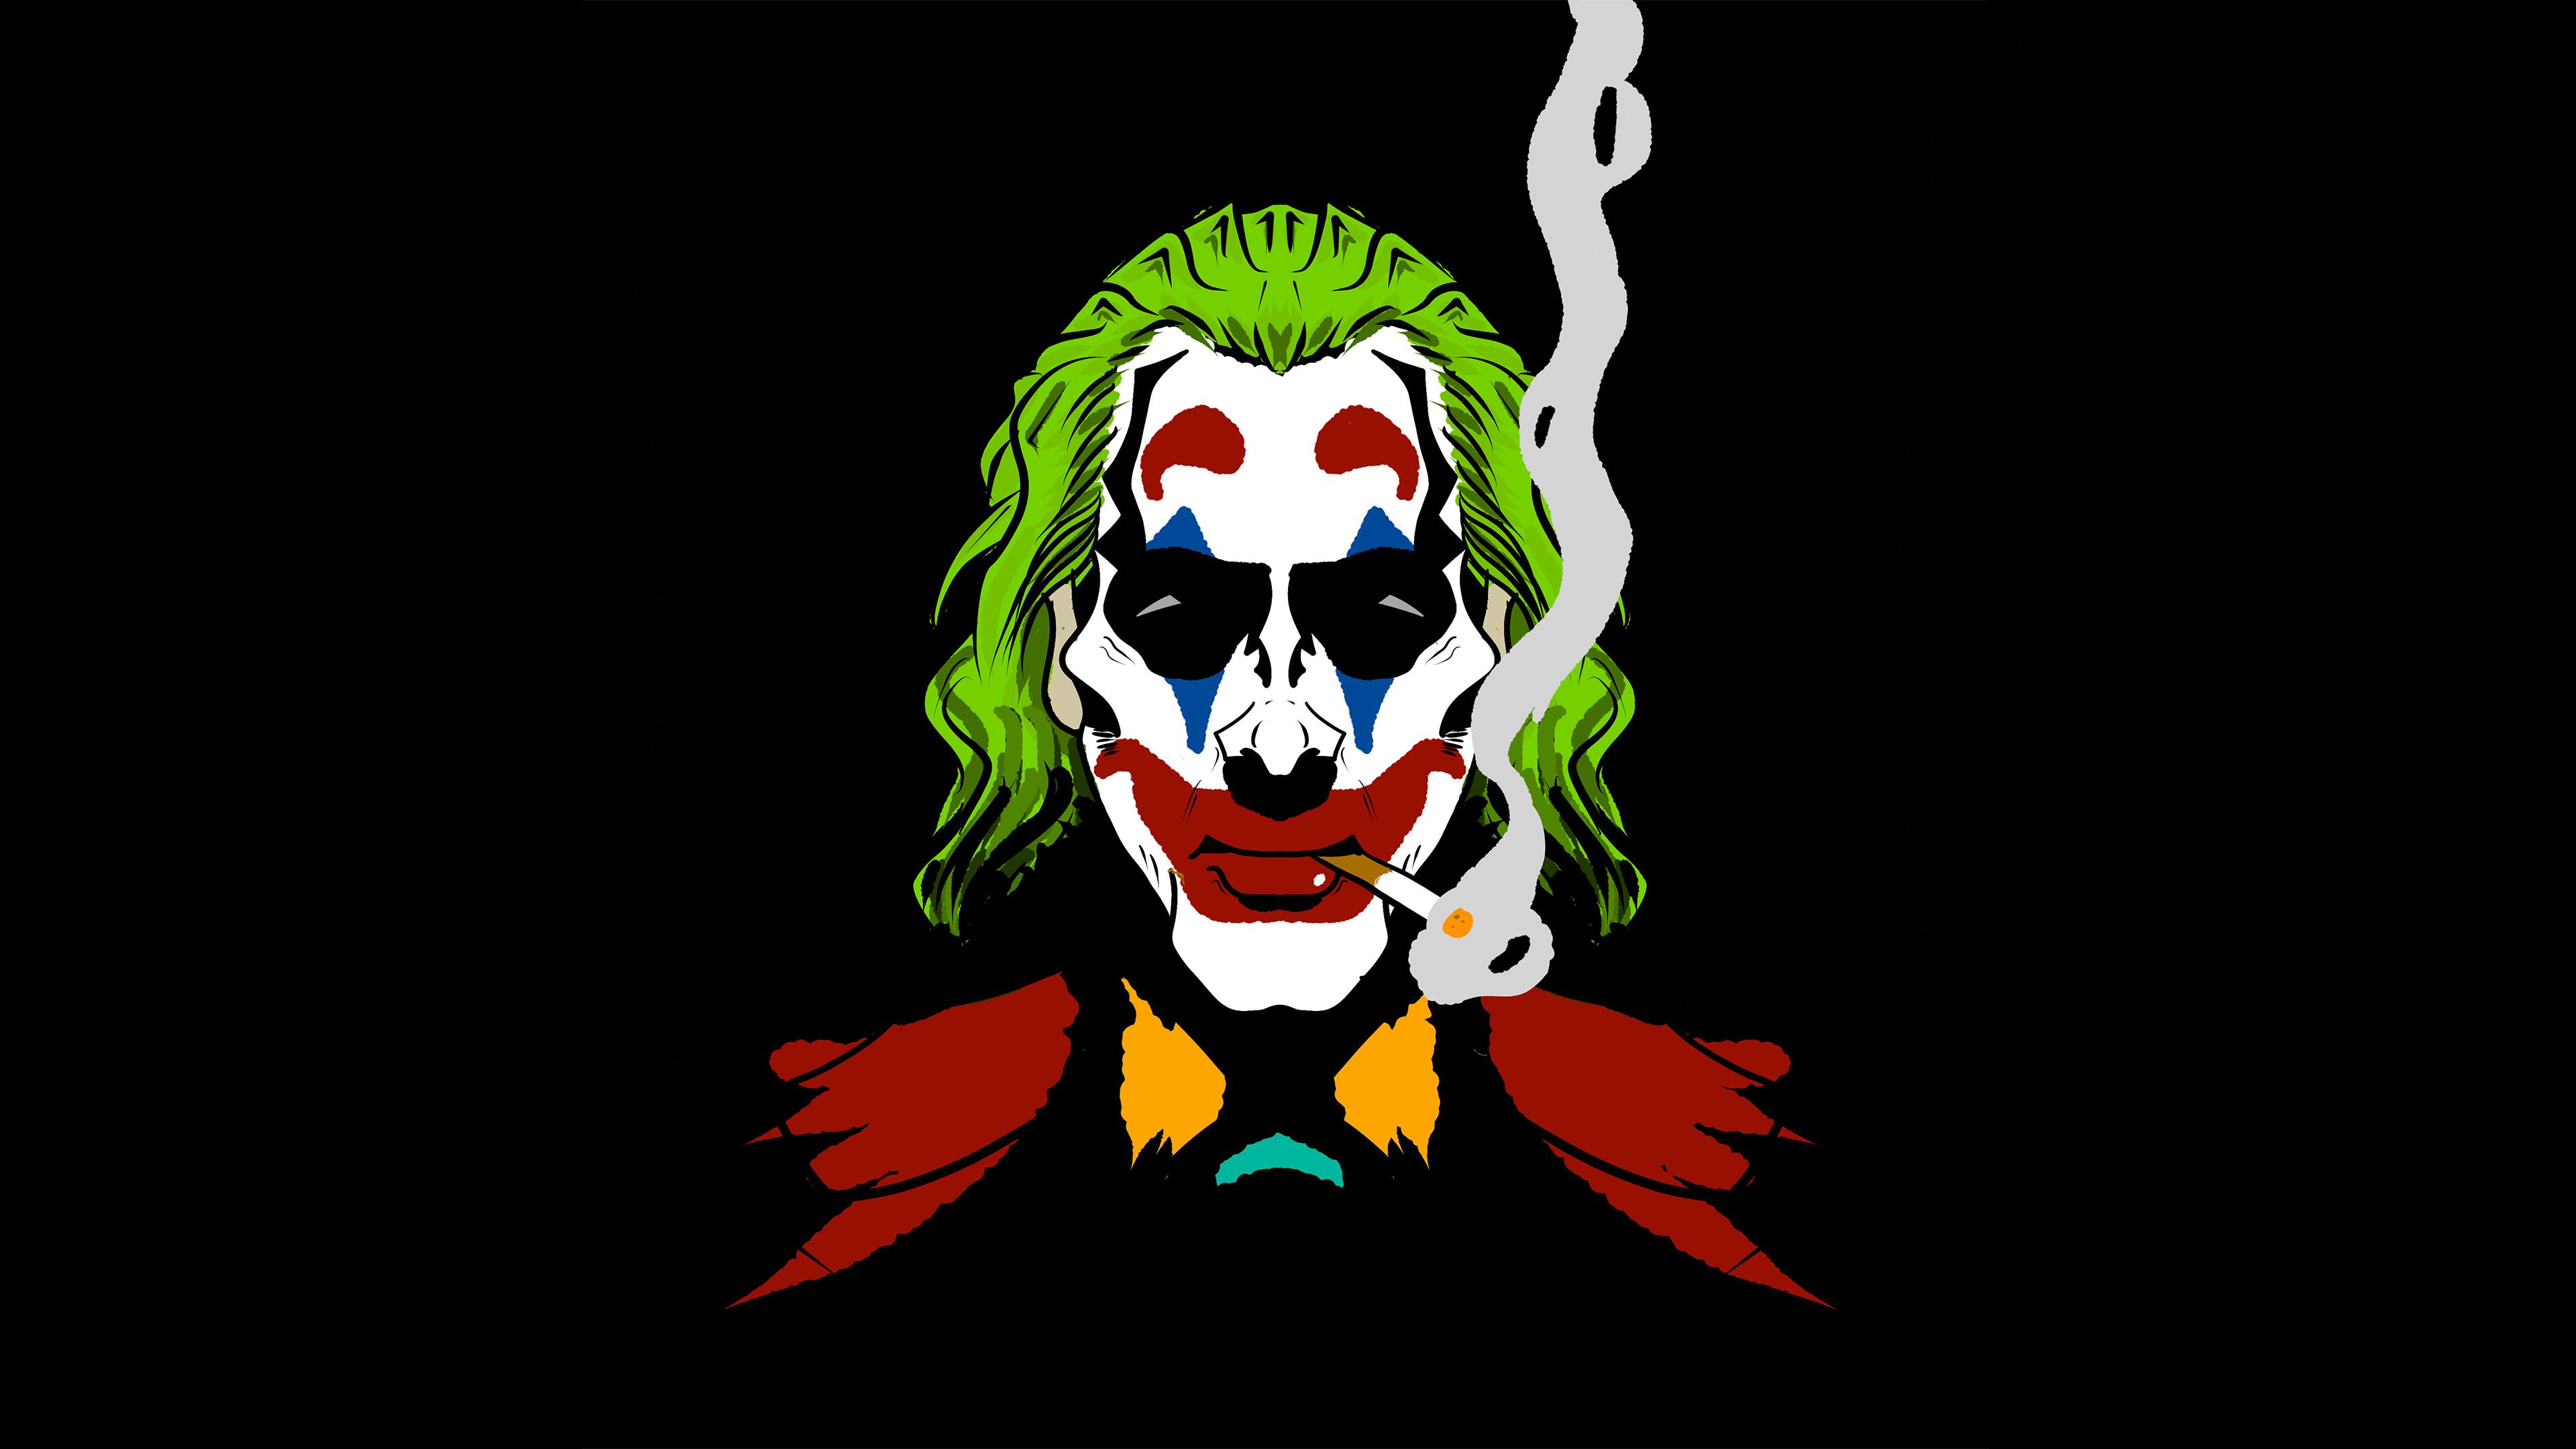 Joker Smoking 1440P Resolution Wallpaper, HD Minimalist 4K Wallpaper, Image, Photo and Background